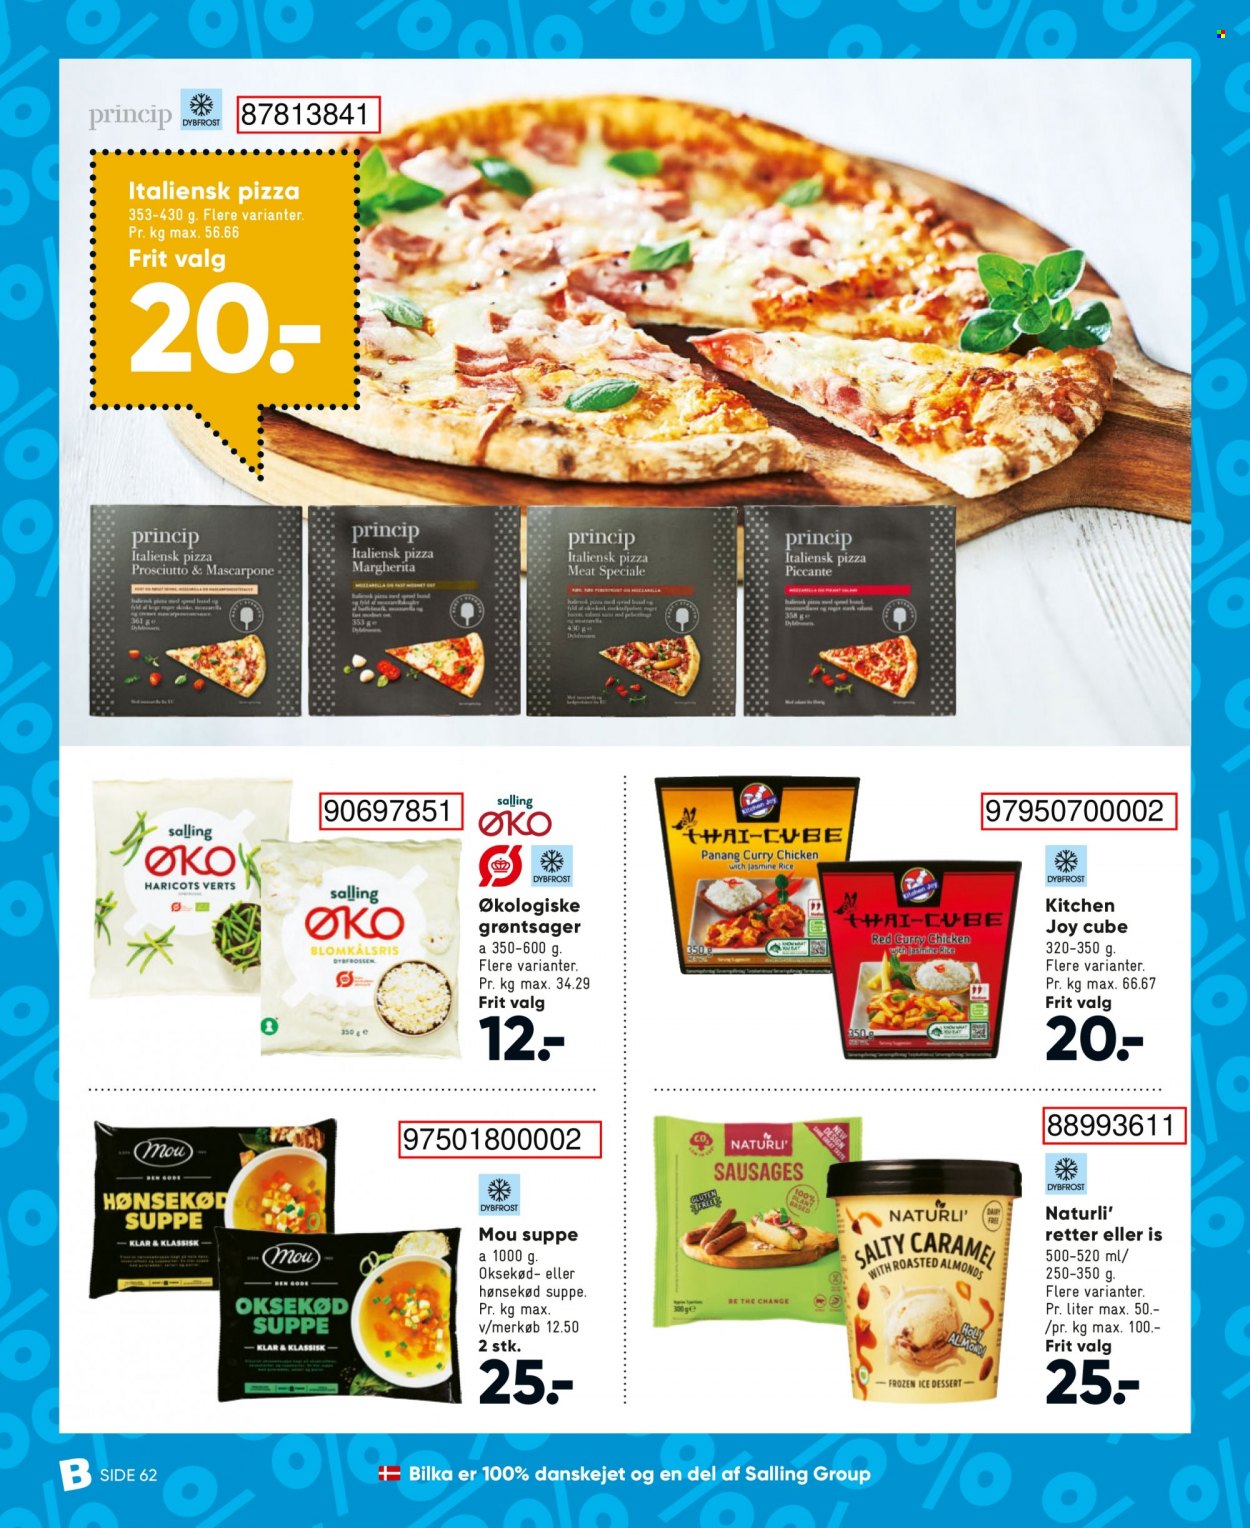 thumbnail - Bilka tilbud  - 15.10.2021 - 21.10.2021 - tilbudsprodukter - oksekød, pizza, suppe, prosciutto, mascarpone, Naturli, grøntsage. Side 80.